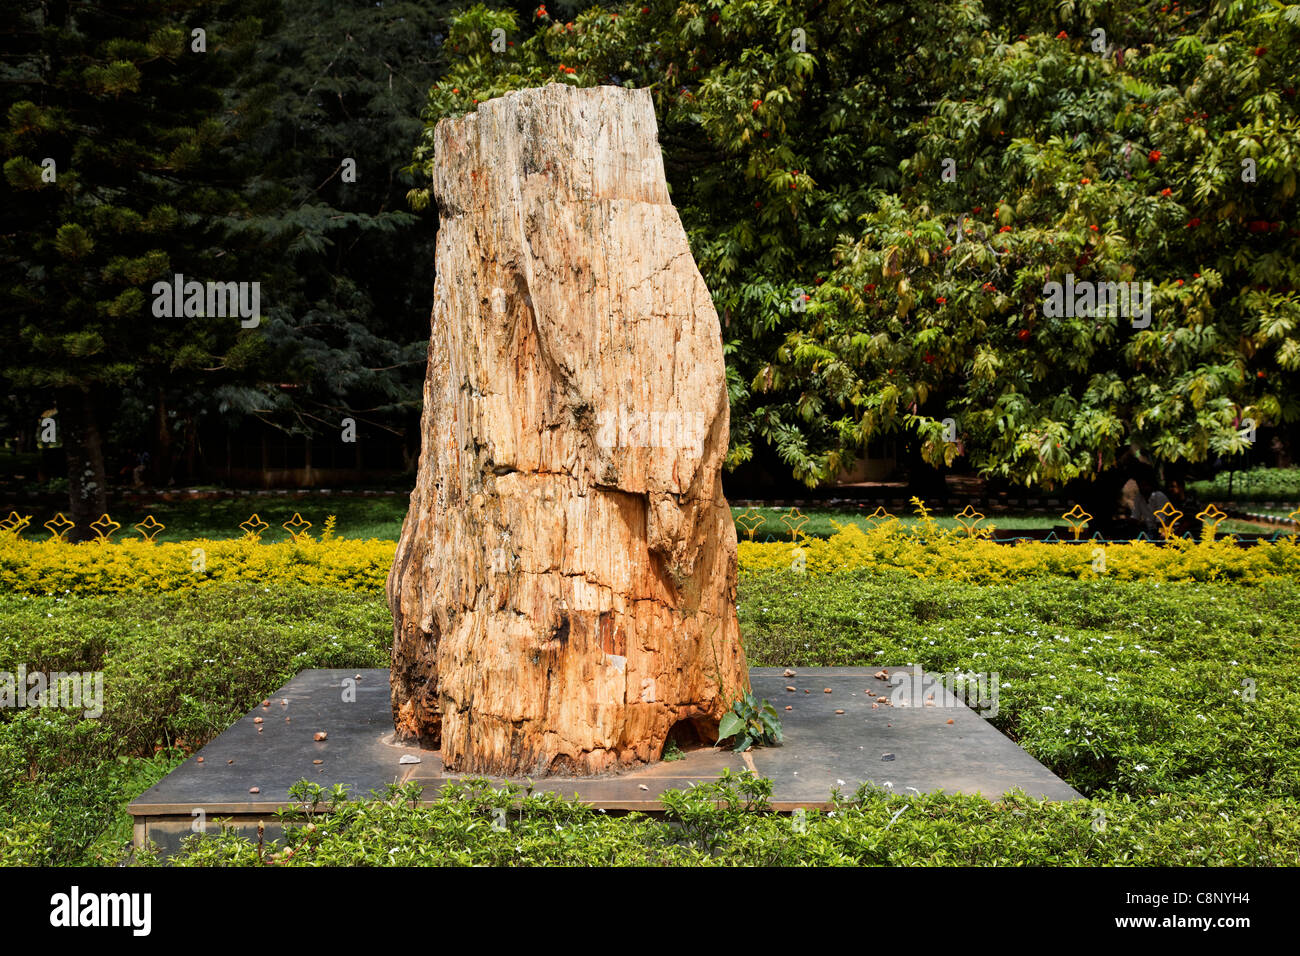 tree stump turned to stone over 20 million years of evolution Bangalore Botanical Gardens India displayed on a stone plinth Stock Photo